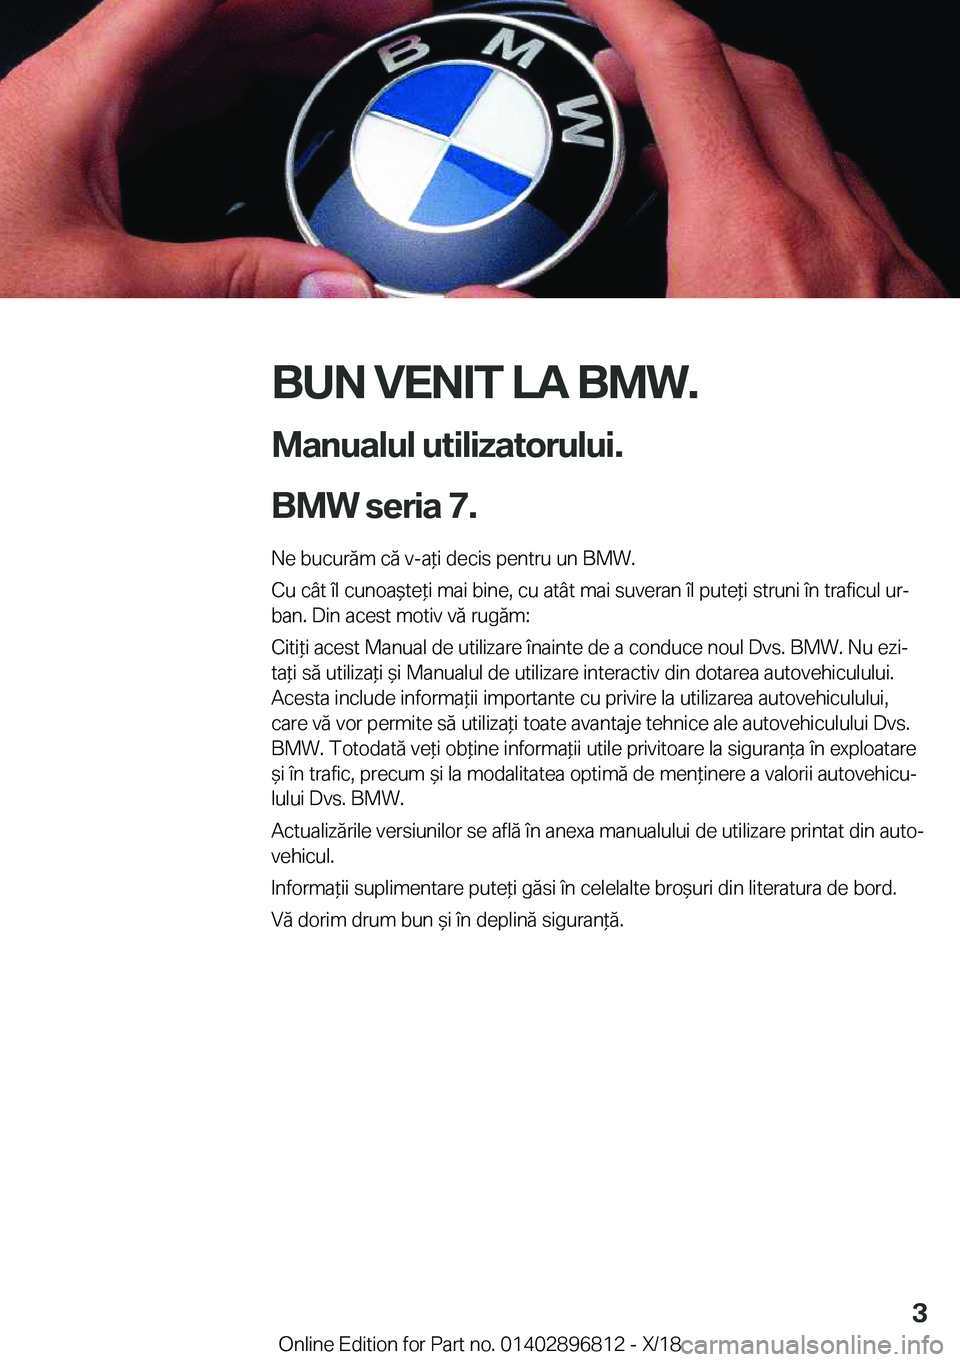 BMW 7 SERIES 2019  Ghiduri De Utilizare (in Romanian) �B�U�N��V�E�N�I�T��L�A��B�M�W�.�M�a�n�u�a�l�u�l��u�t�i�l�i�z�a�t�o�r�u�l�u�i�.
�B�M�W��s�e�r�i�a��7�.
�N�e��b�u�c�u�r�